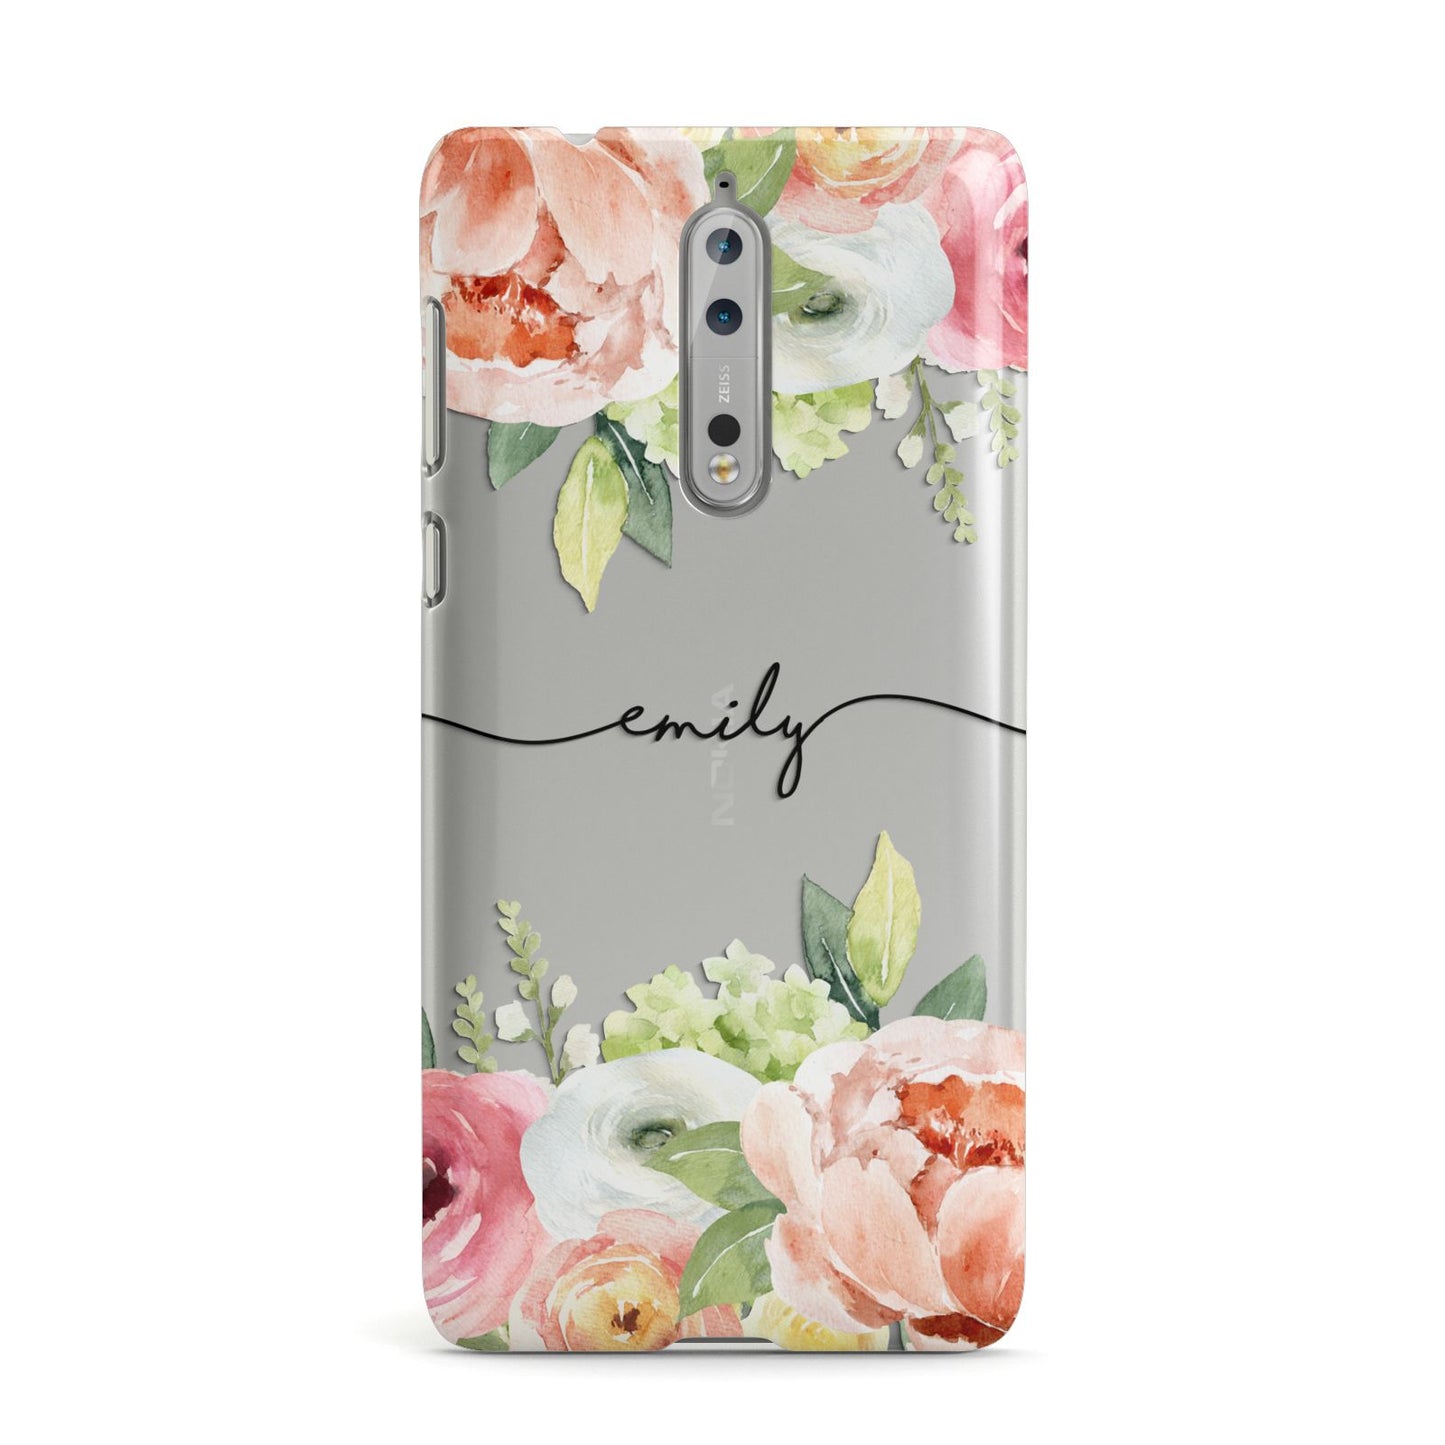 Personalised Flowers Nokia Case